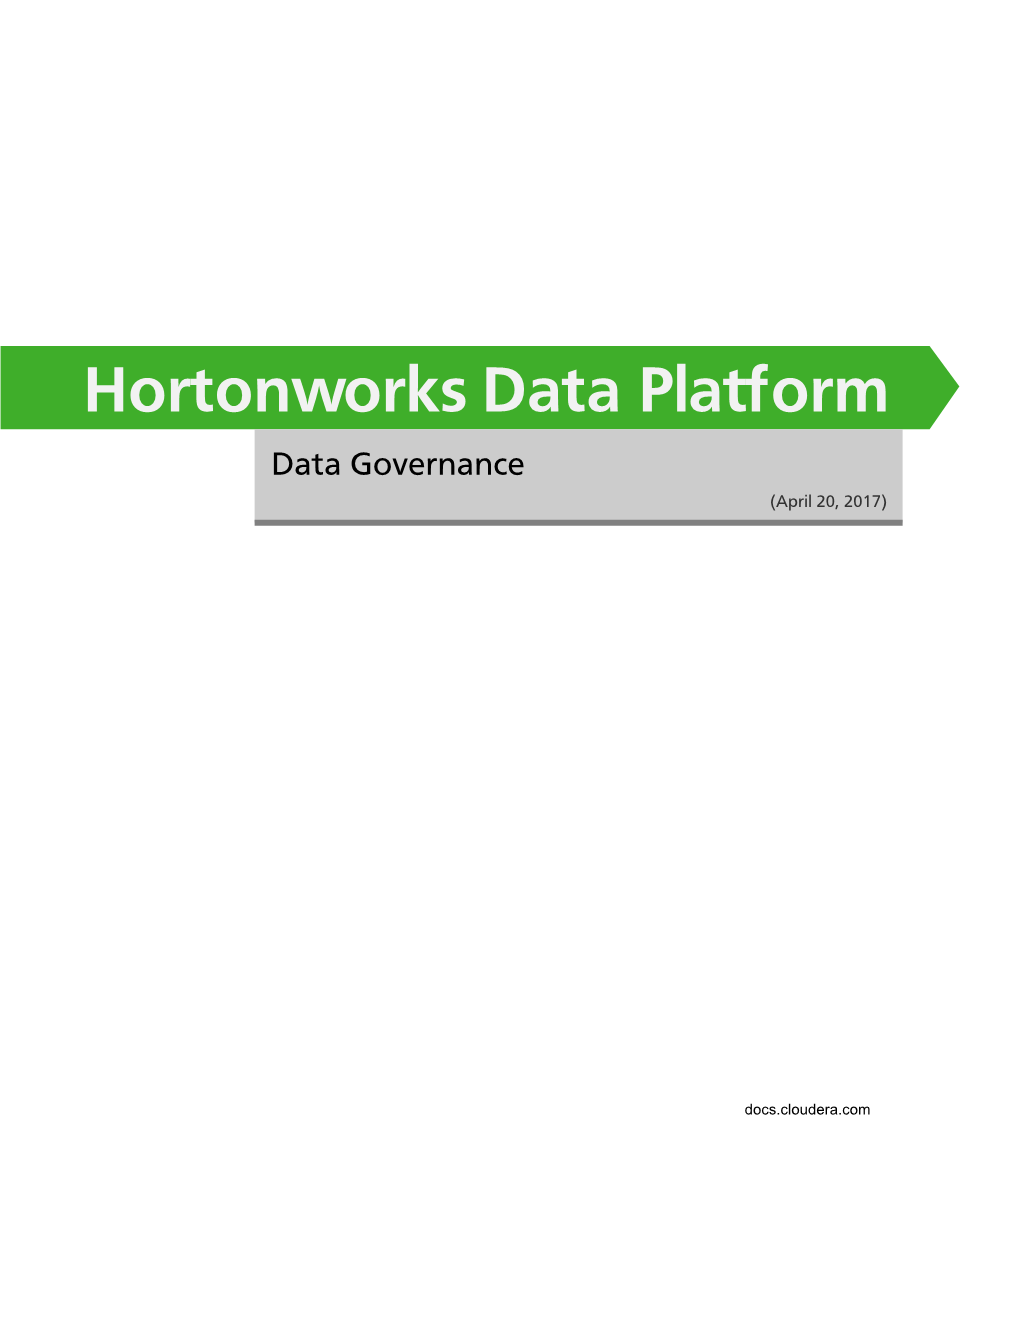 Hortonworks Data Platform Data Governance (April 20, 2017)